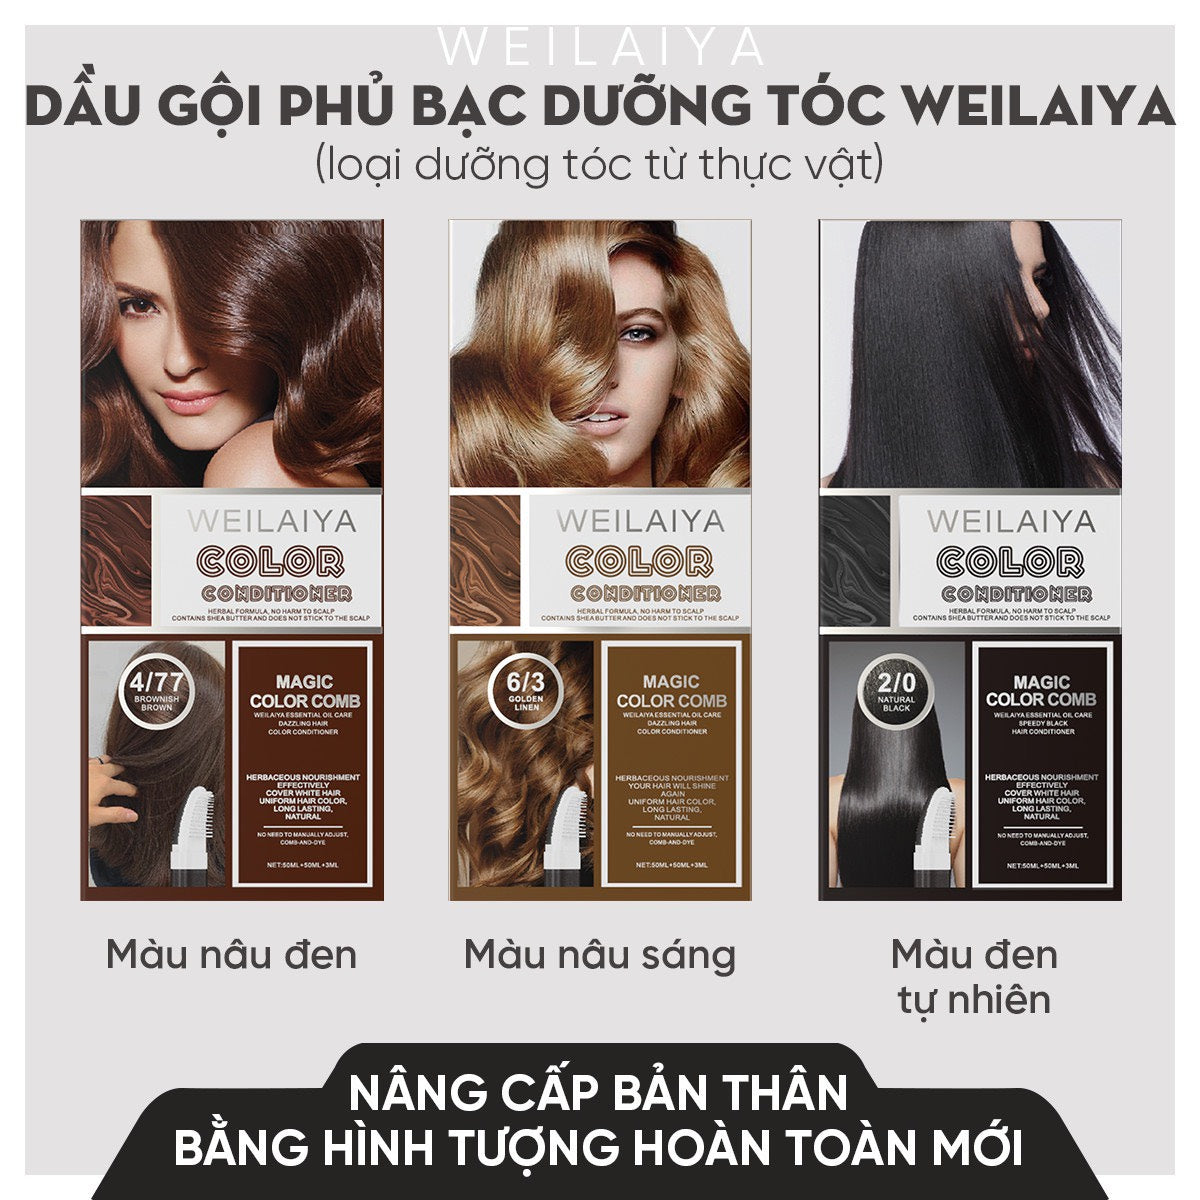 WEILAIYA Hair Color Shampoo Comb for Covering Gray Hair